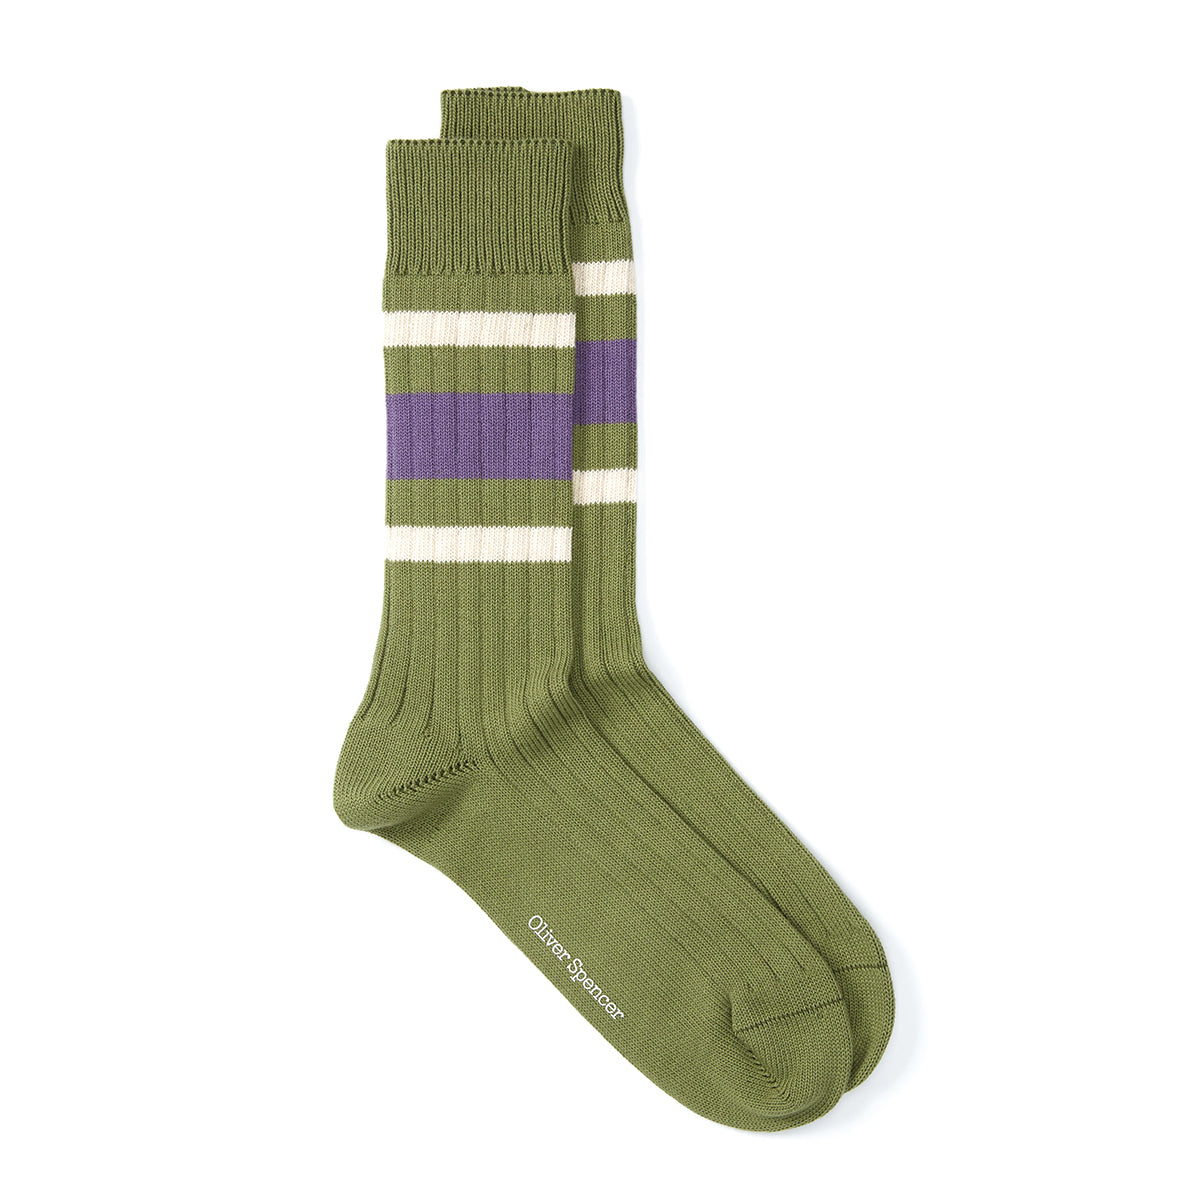 Polperro Socks - Albion Green/Mauve